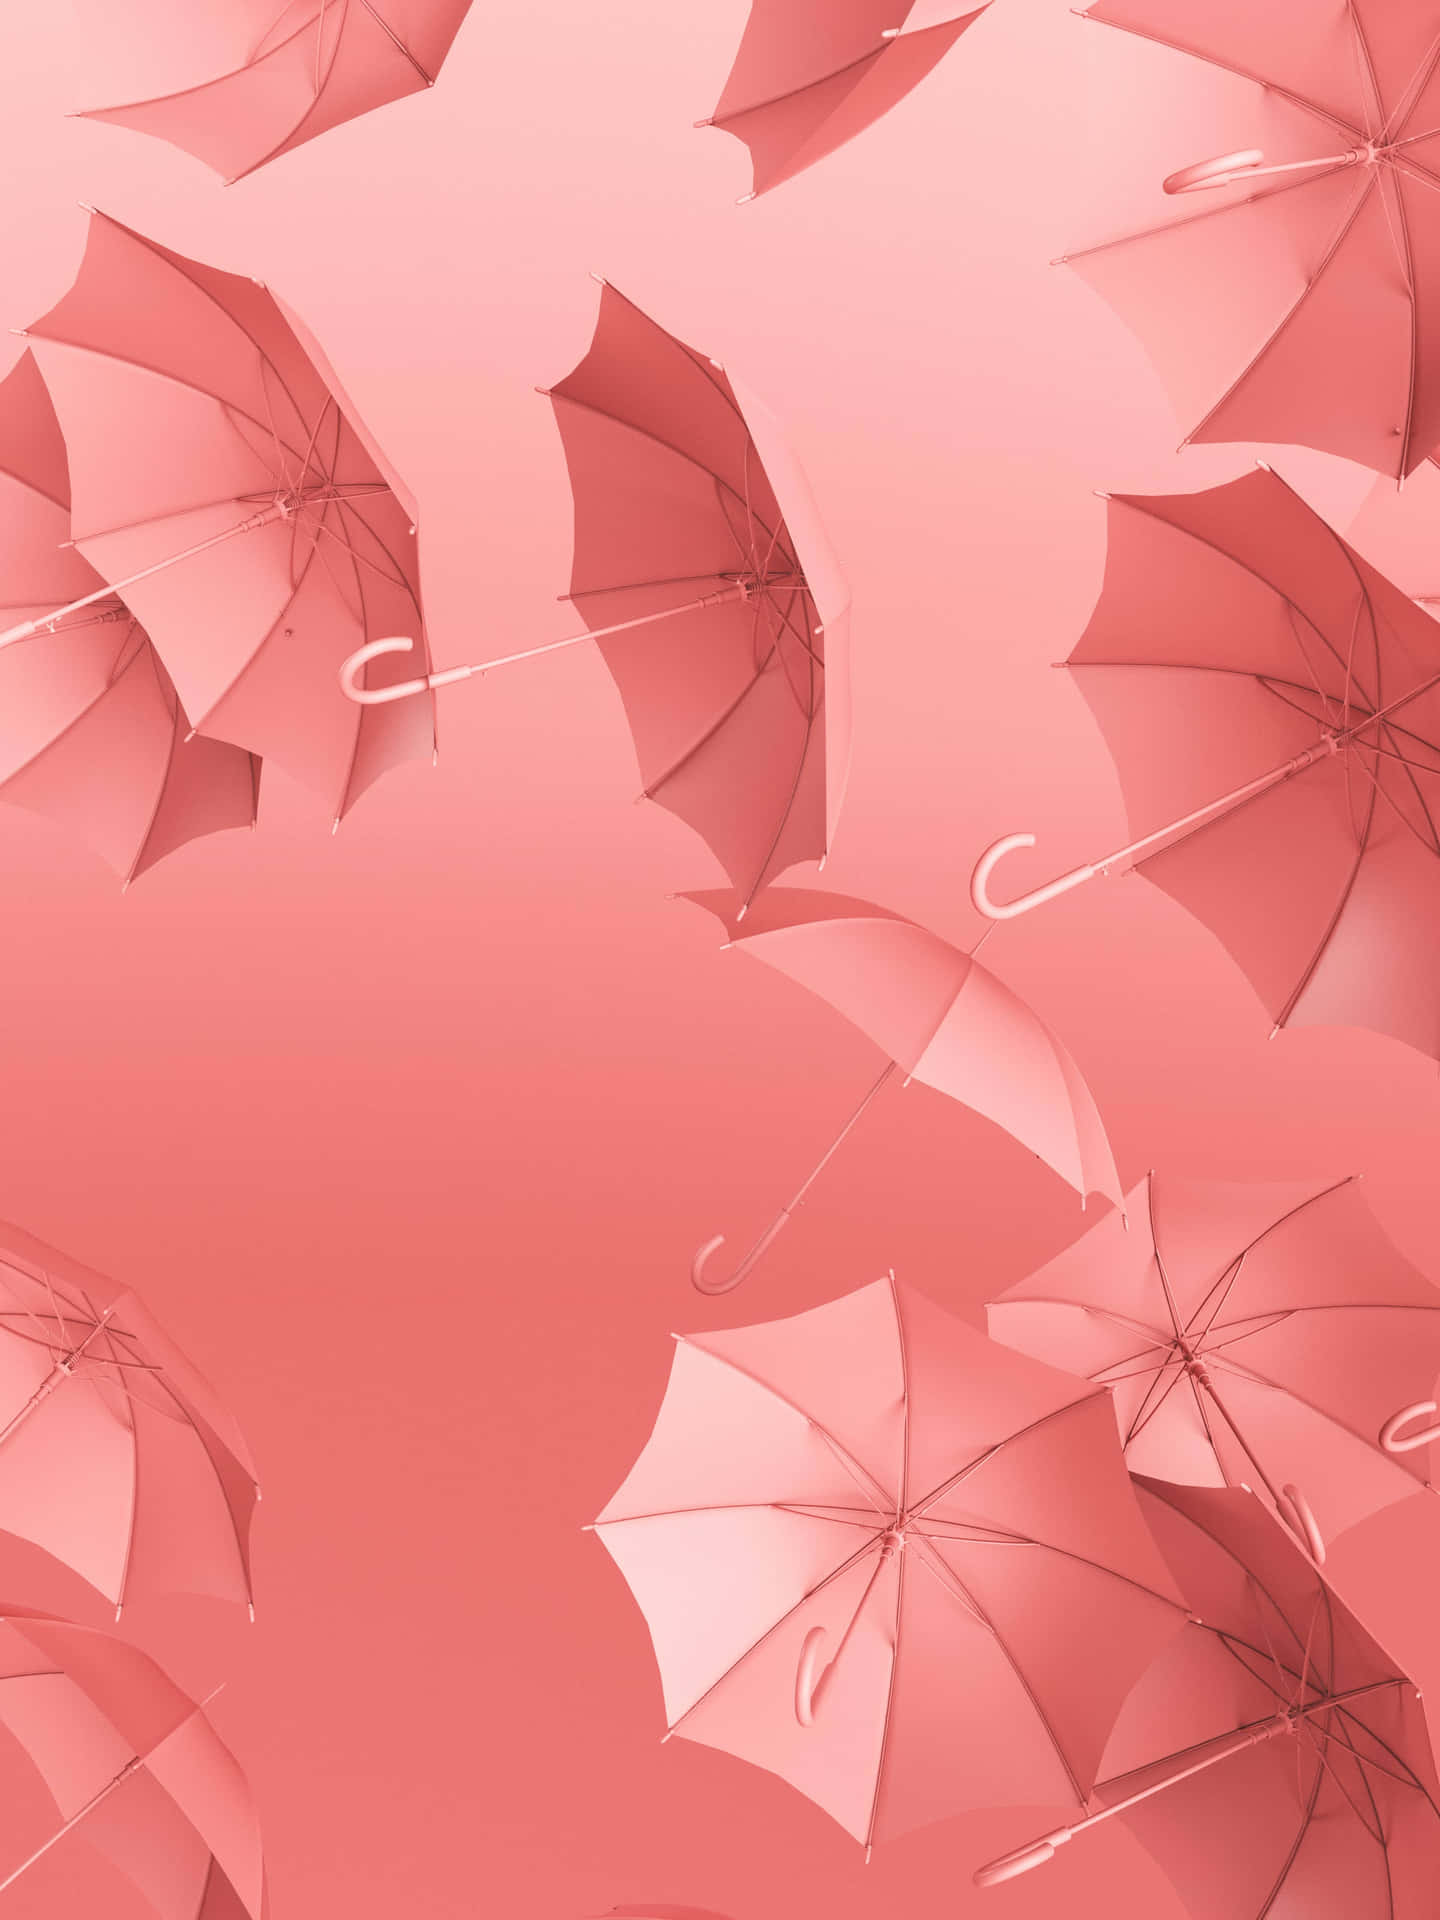 Soft Pink Umbrellas Aesthetic Wallpaper